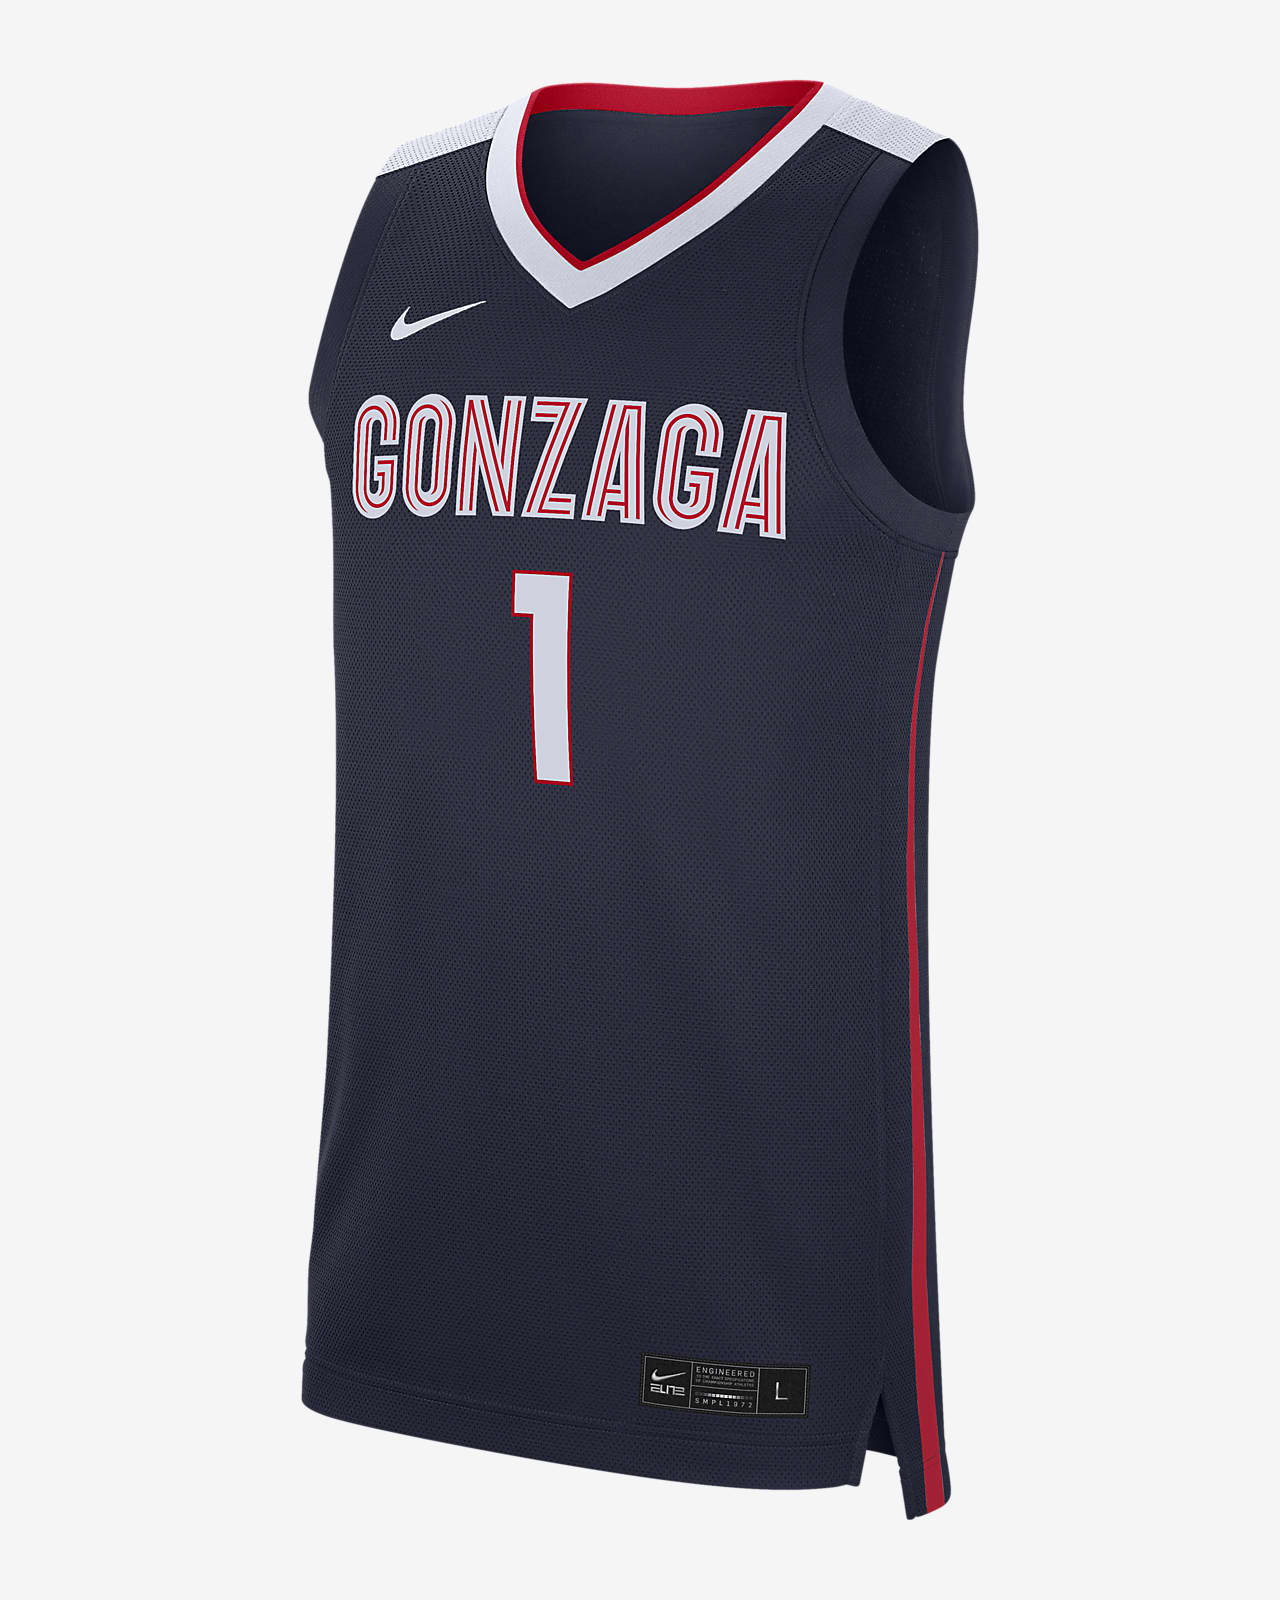 Nike College Replica (Gonzaga) Men's Basketball Jersey